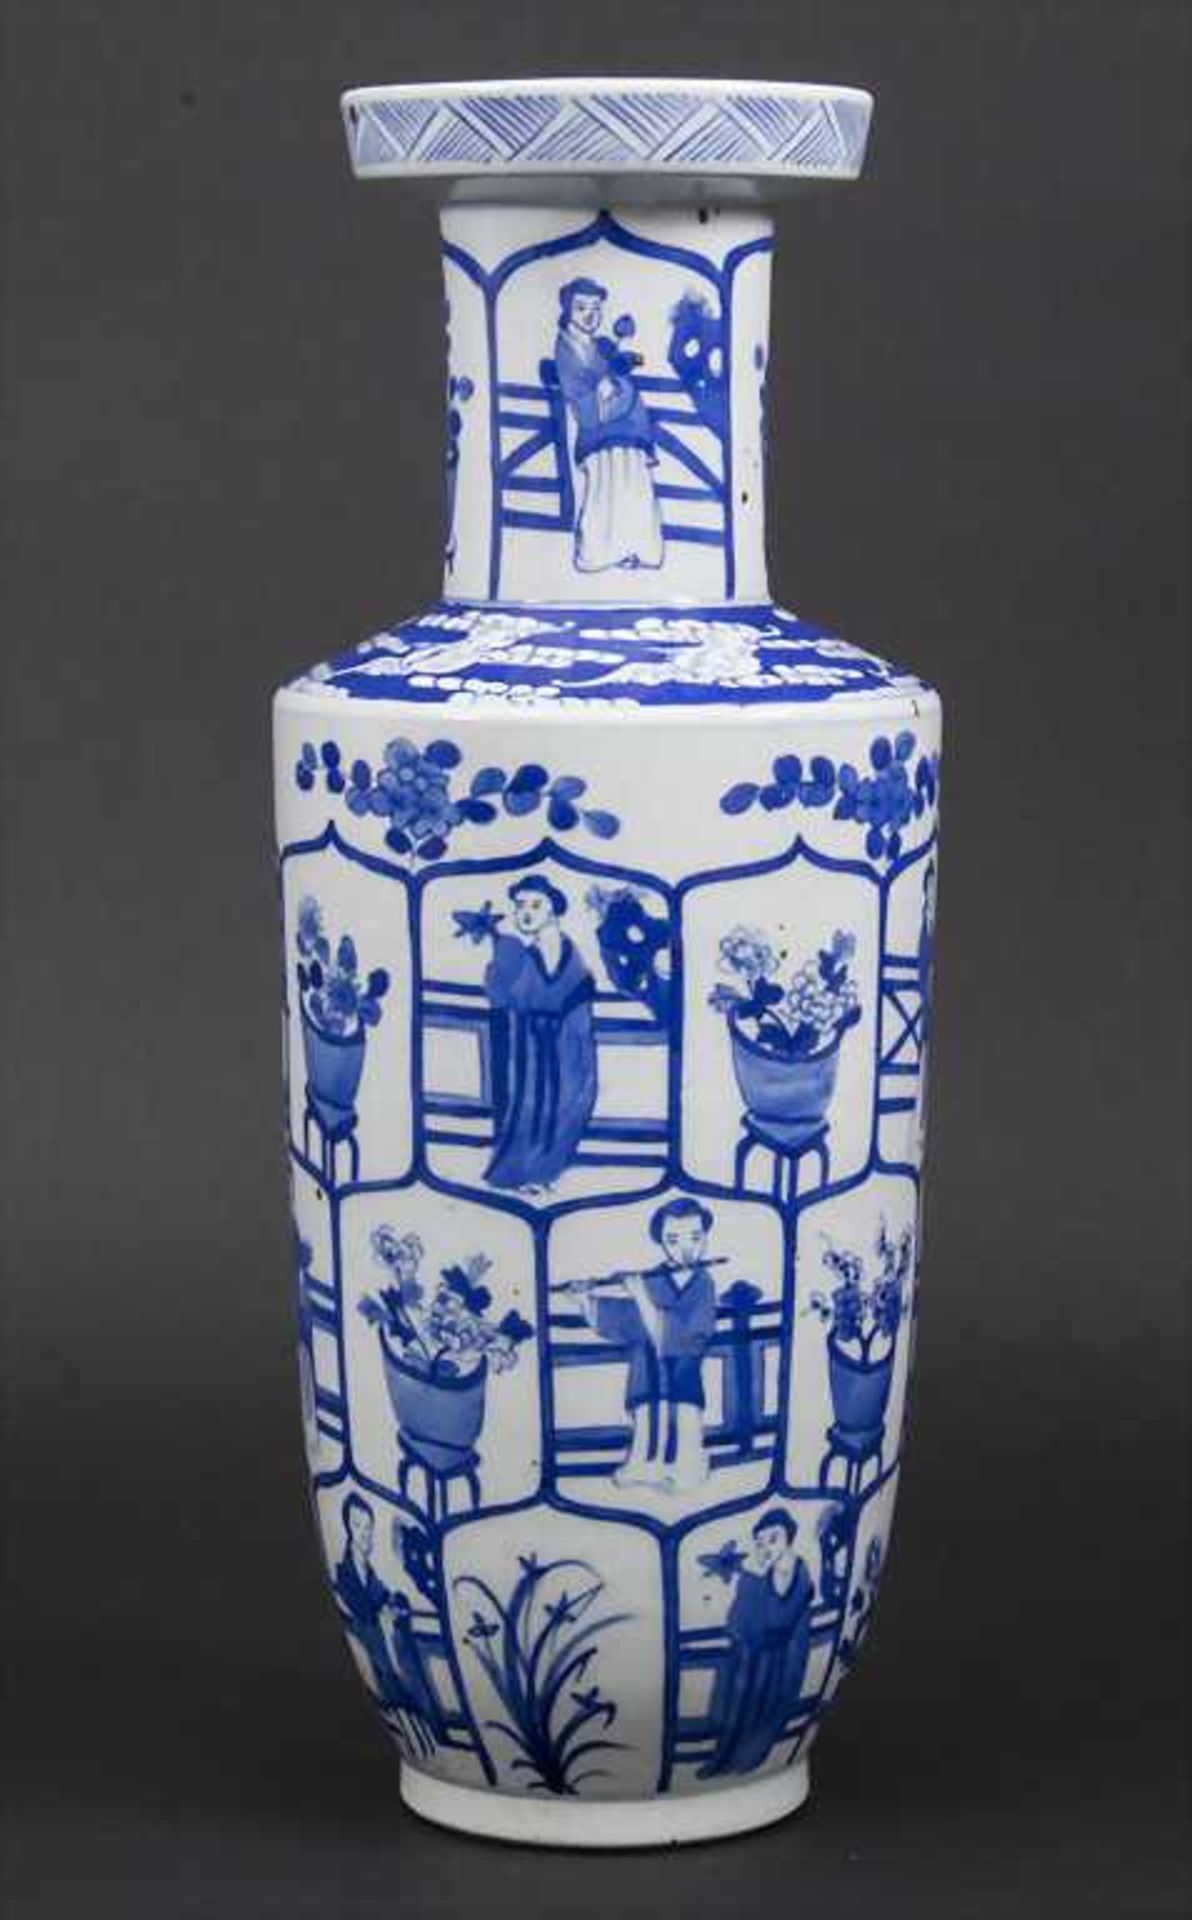 Ziervase / A decorative vase, China, Qing-Dynastie (1644-1911), wohl Kangxi-Periode (1662-1722) - Bild 2 aus 5